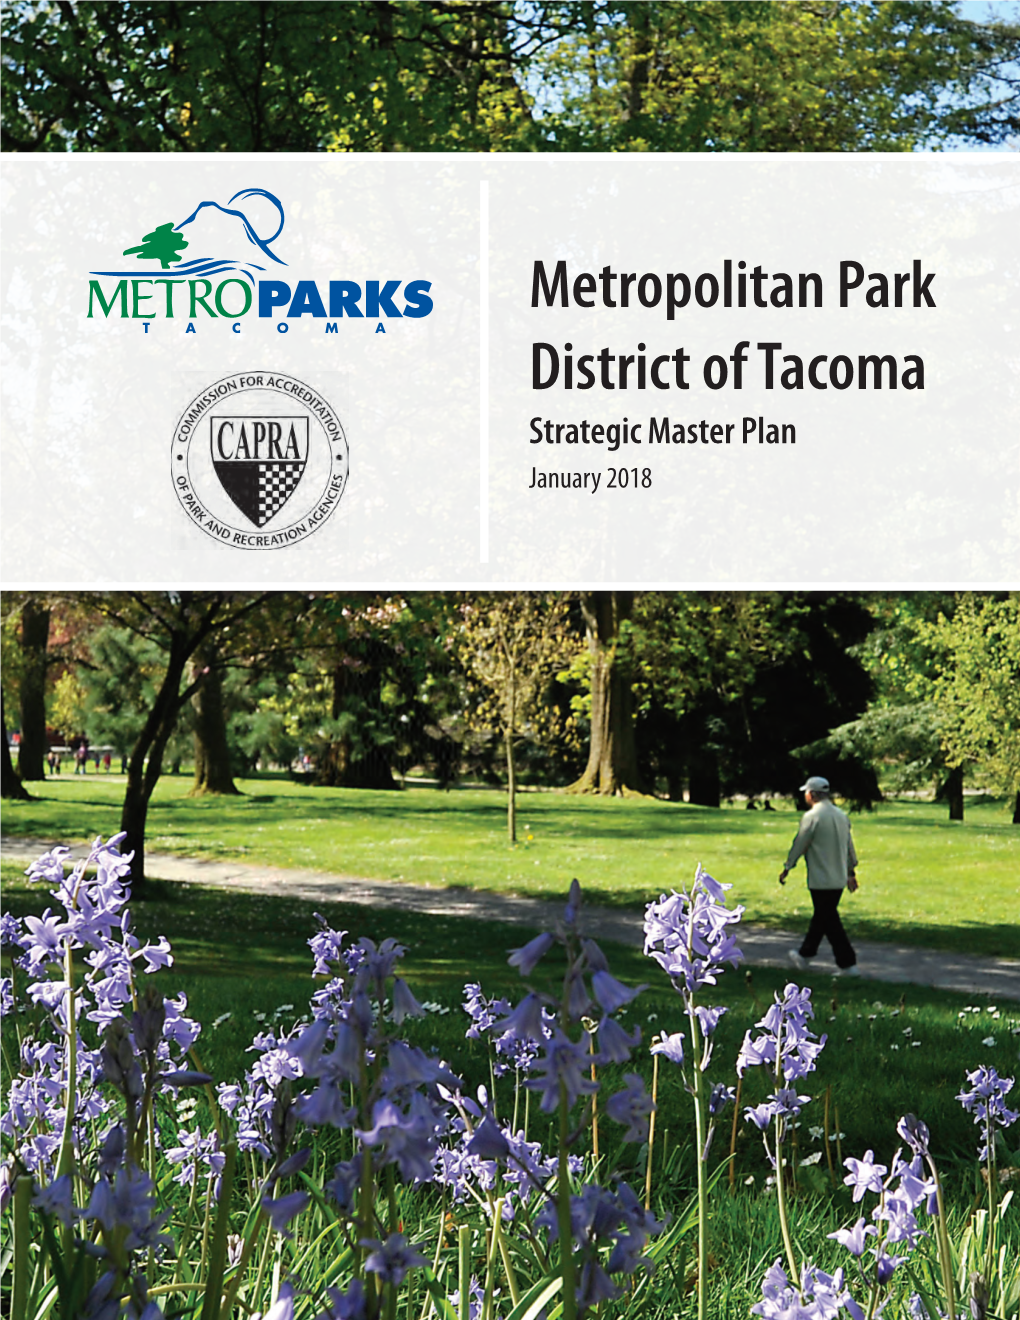 Metropolitan Park District of Tacoma Strategic Master Plan January 2018